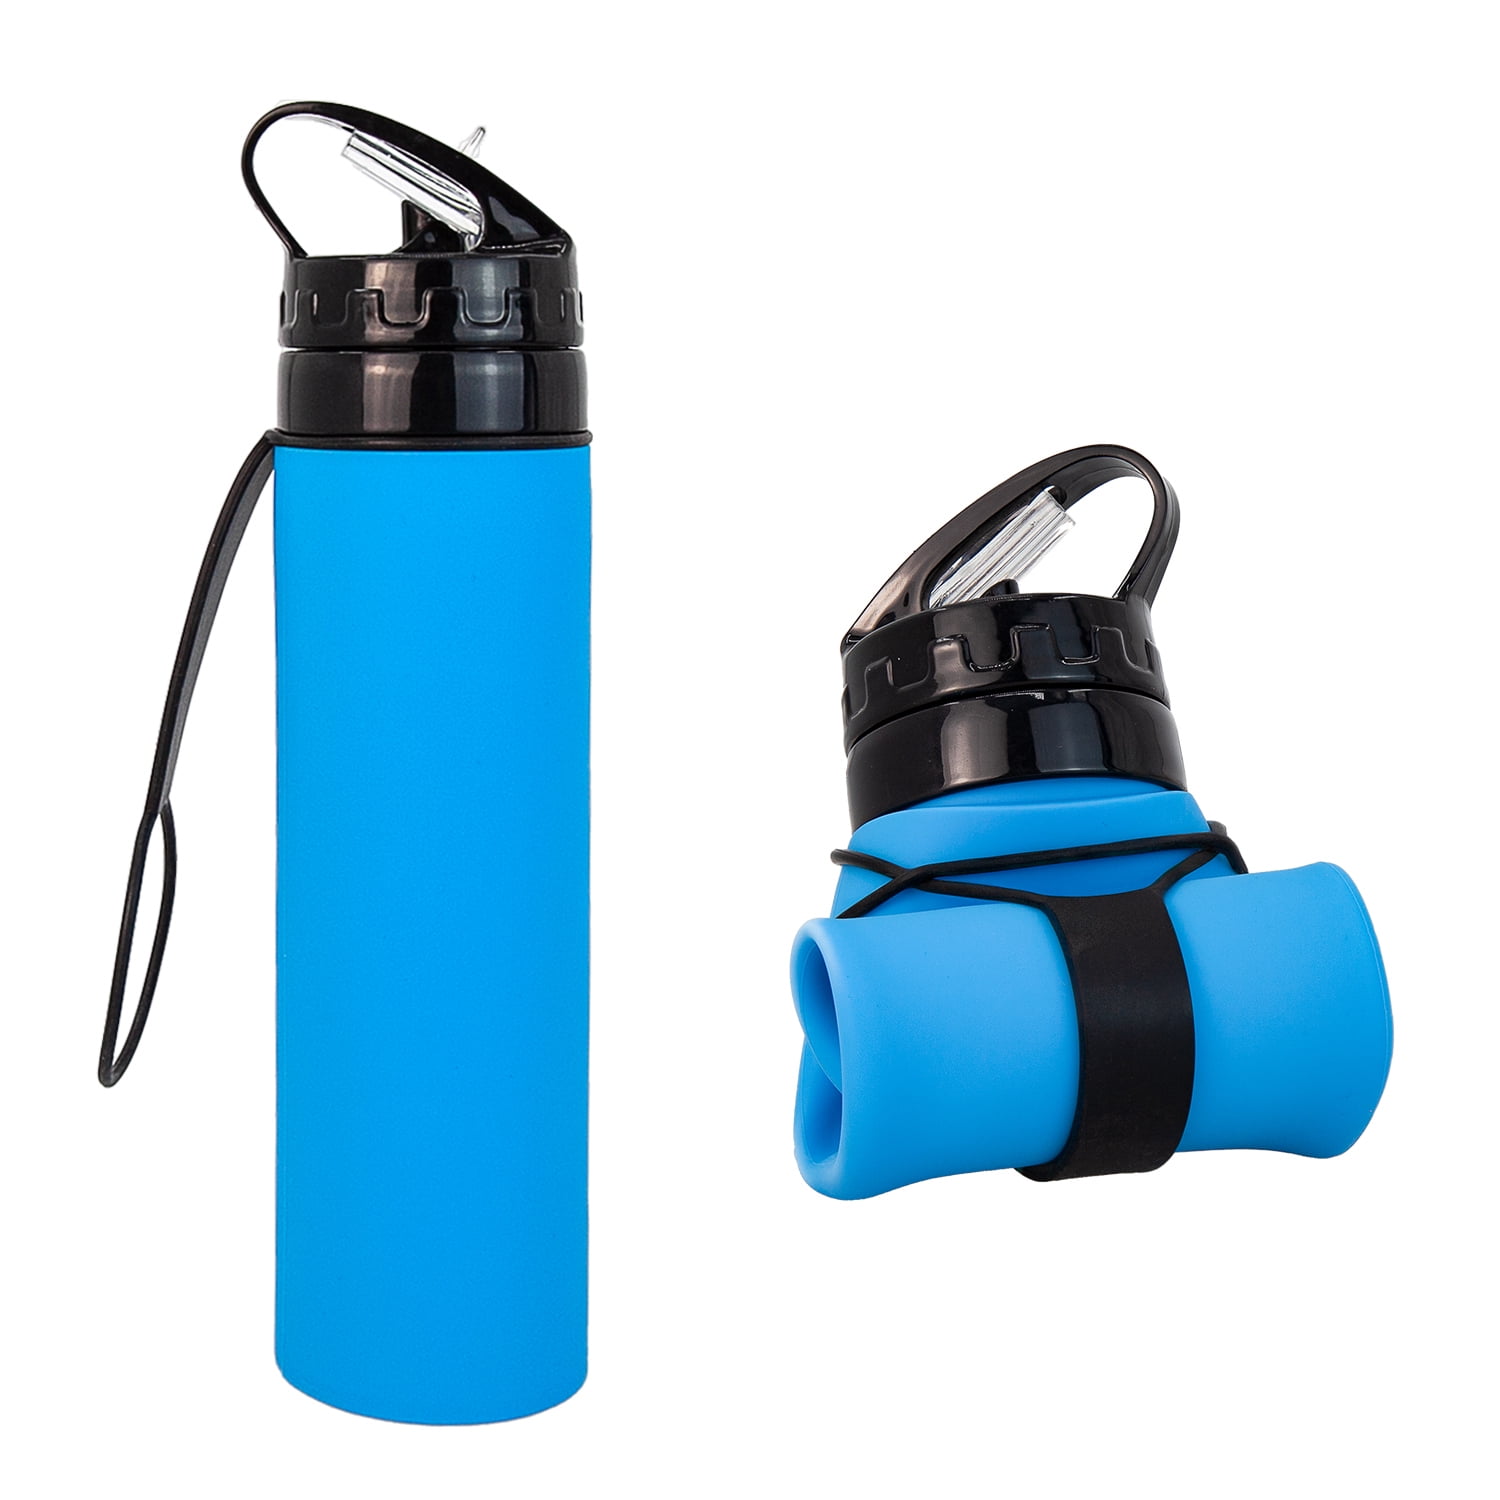 Buy HYDROSÅK Collapsible Water Bottle with Carrying Handle Online at – Skog  Å Kust